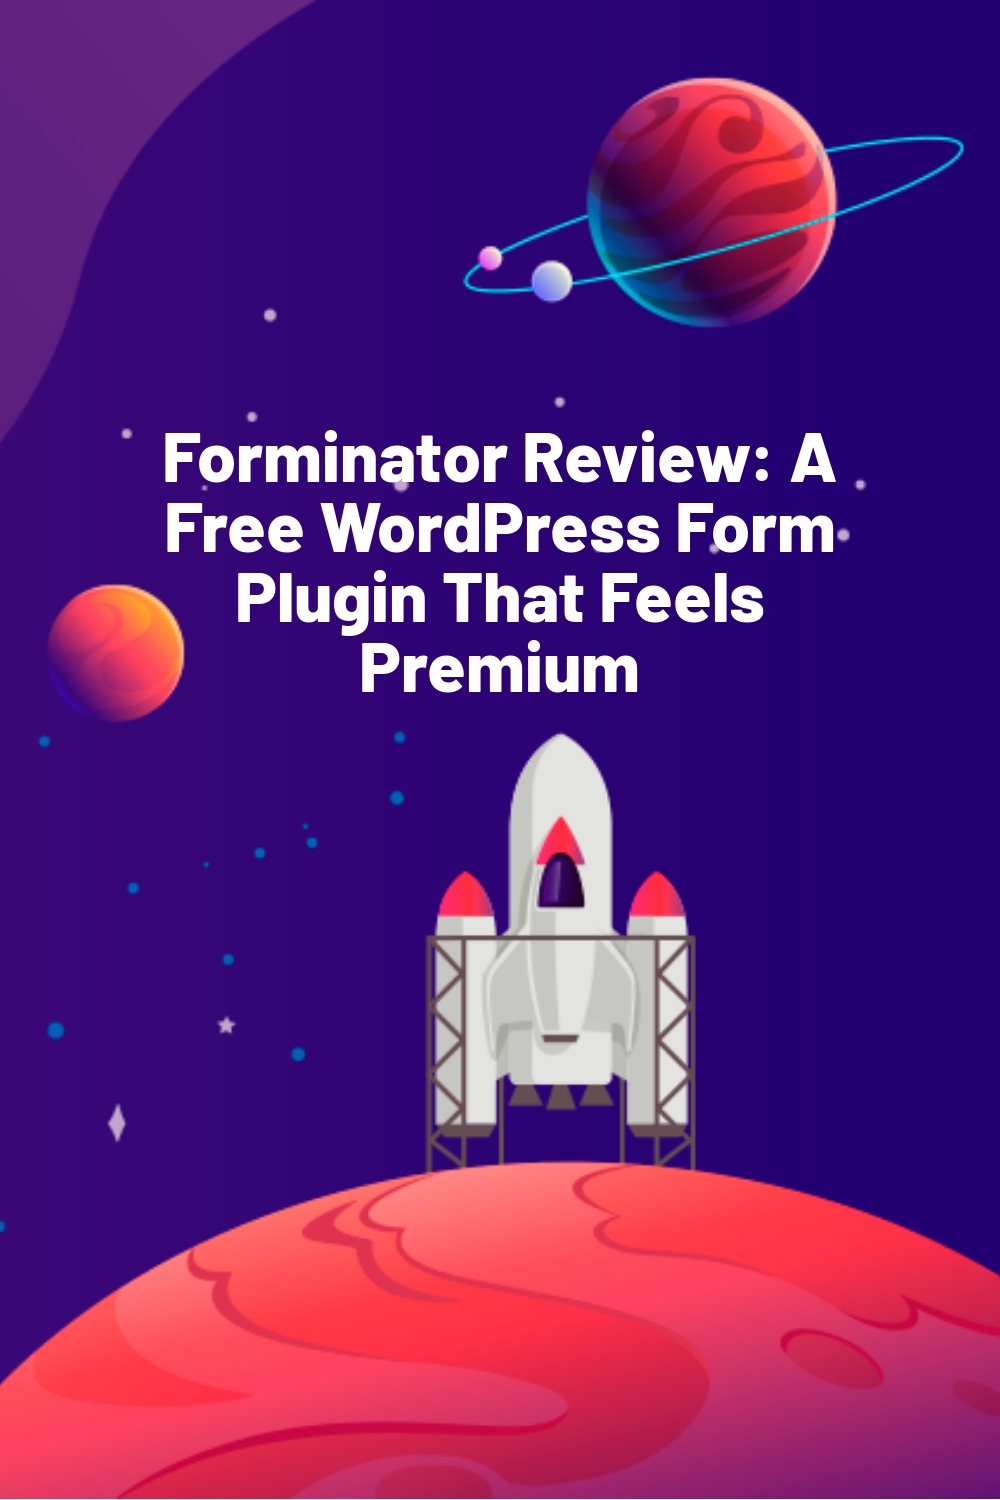 Forminator Review: A Free WordPress Form Plugin That Feels Premium